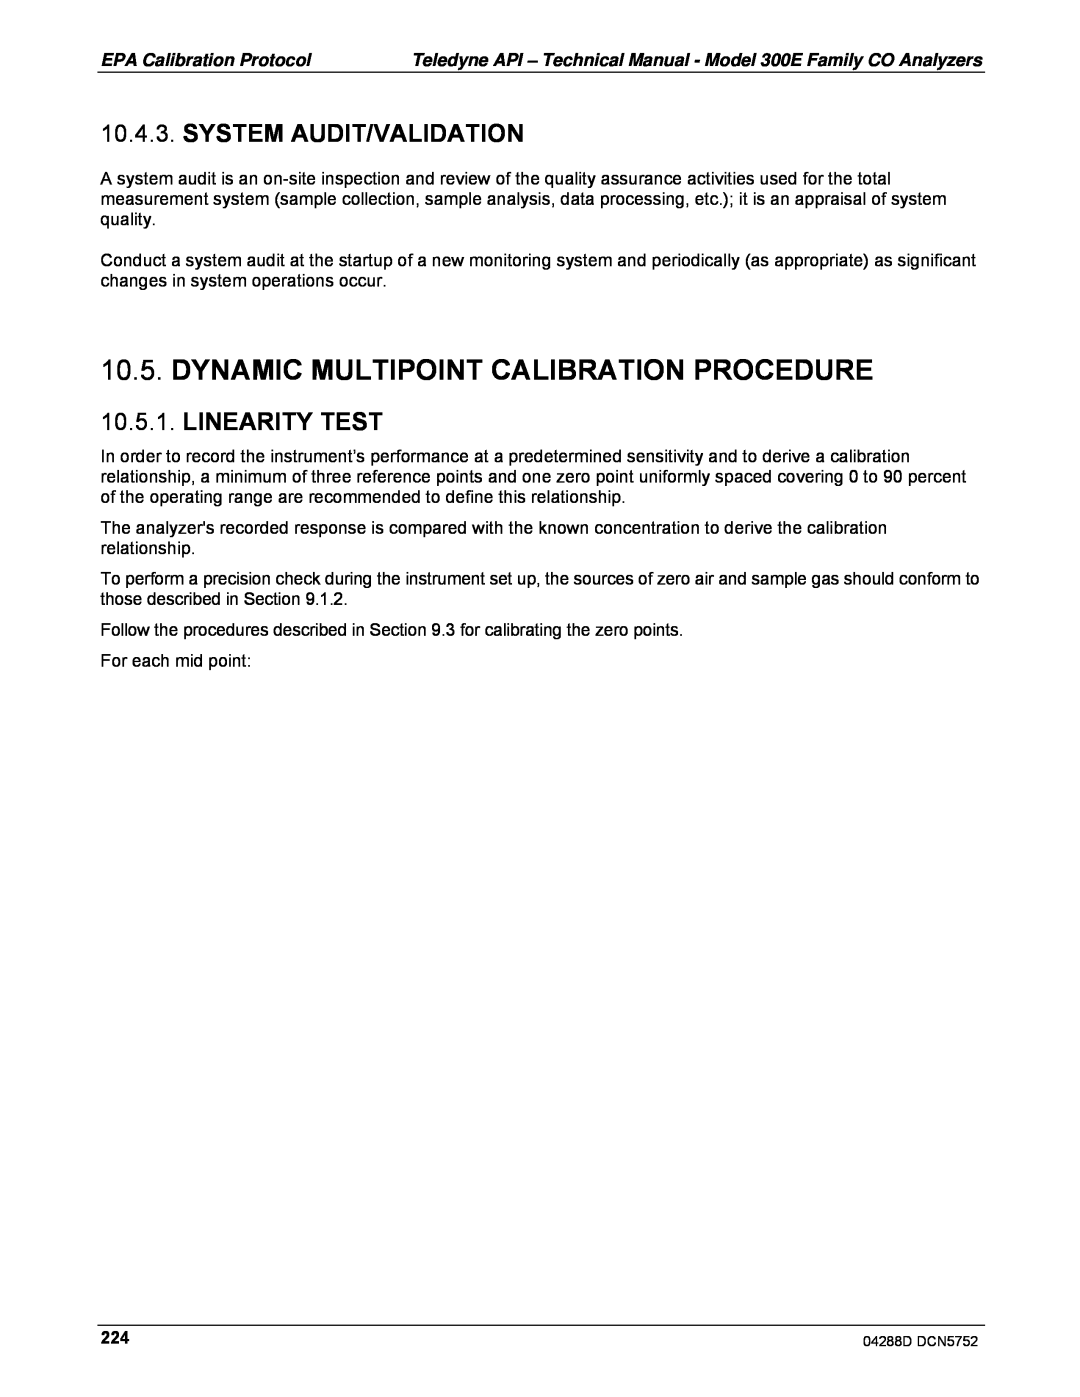 Teledyne M300EM operation manual Dynamic Multipoint Calibration Procedure, System Audit/Validation, Linearity Test 